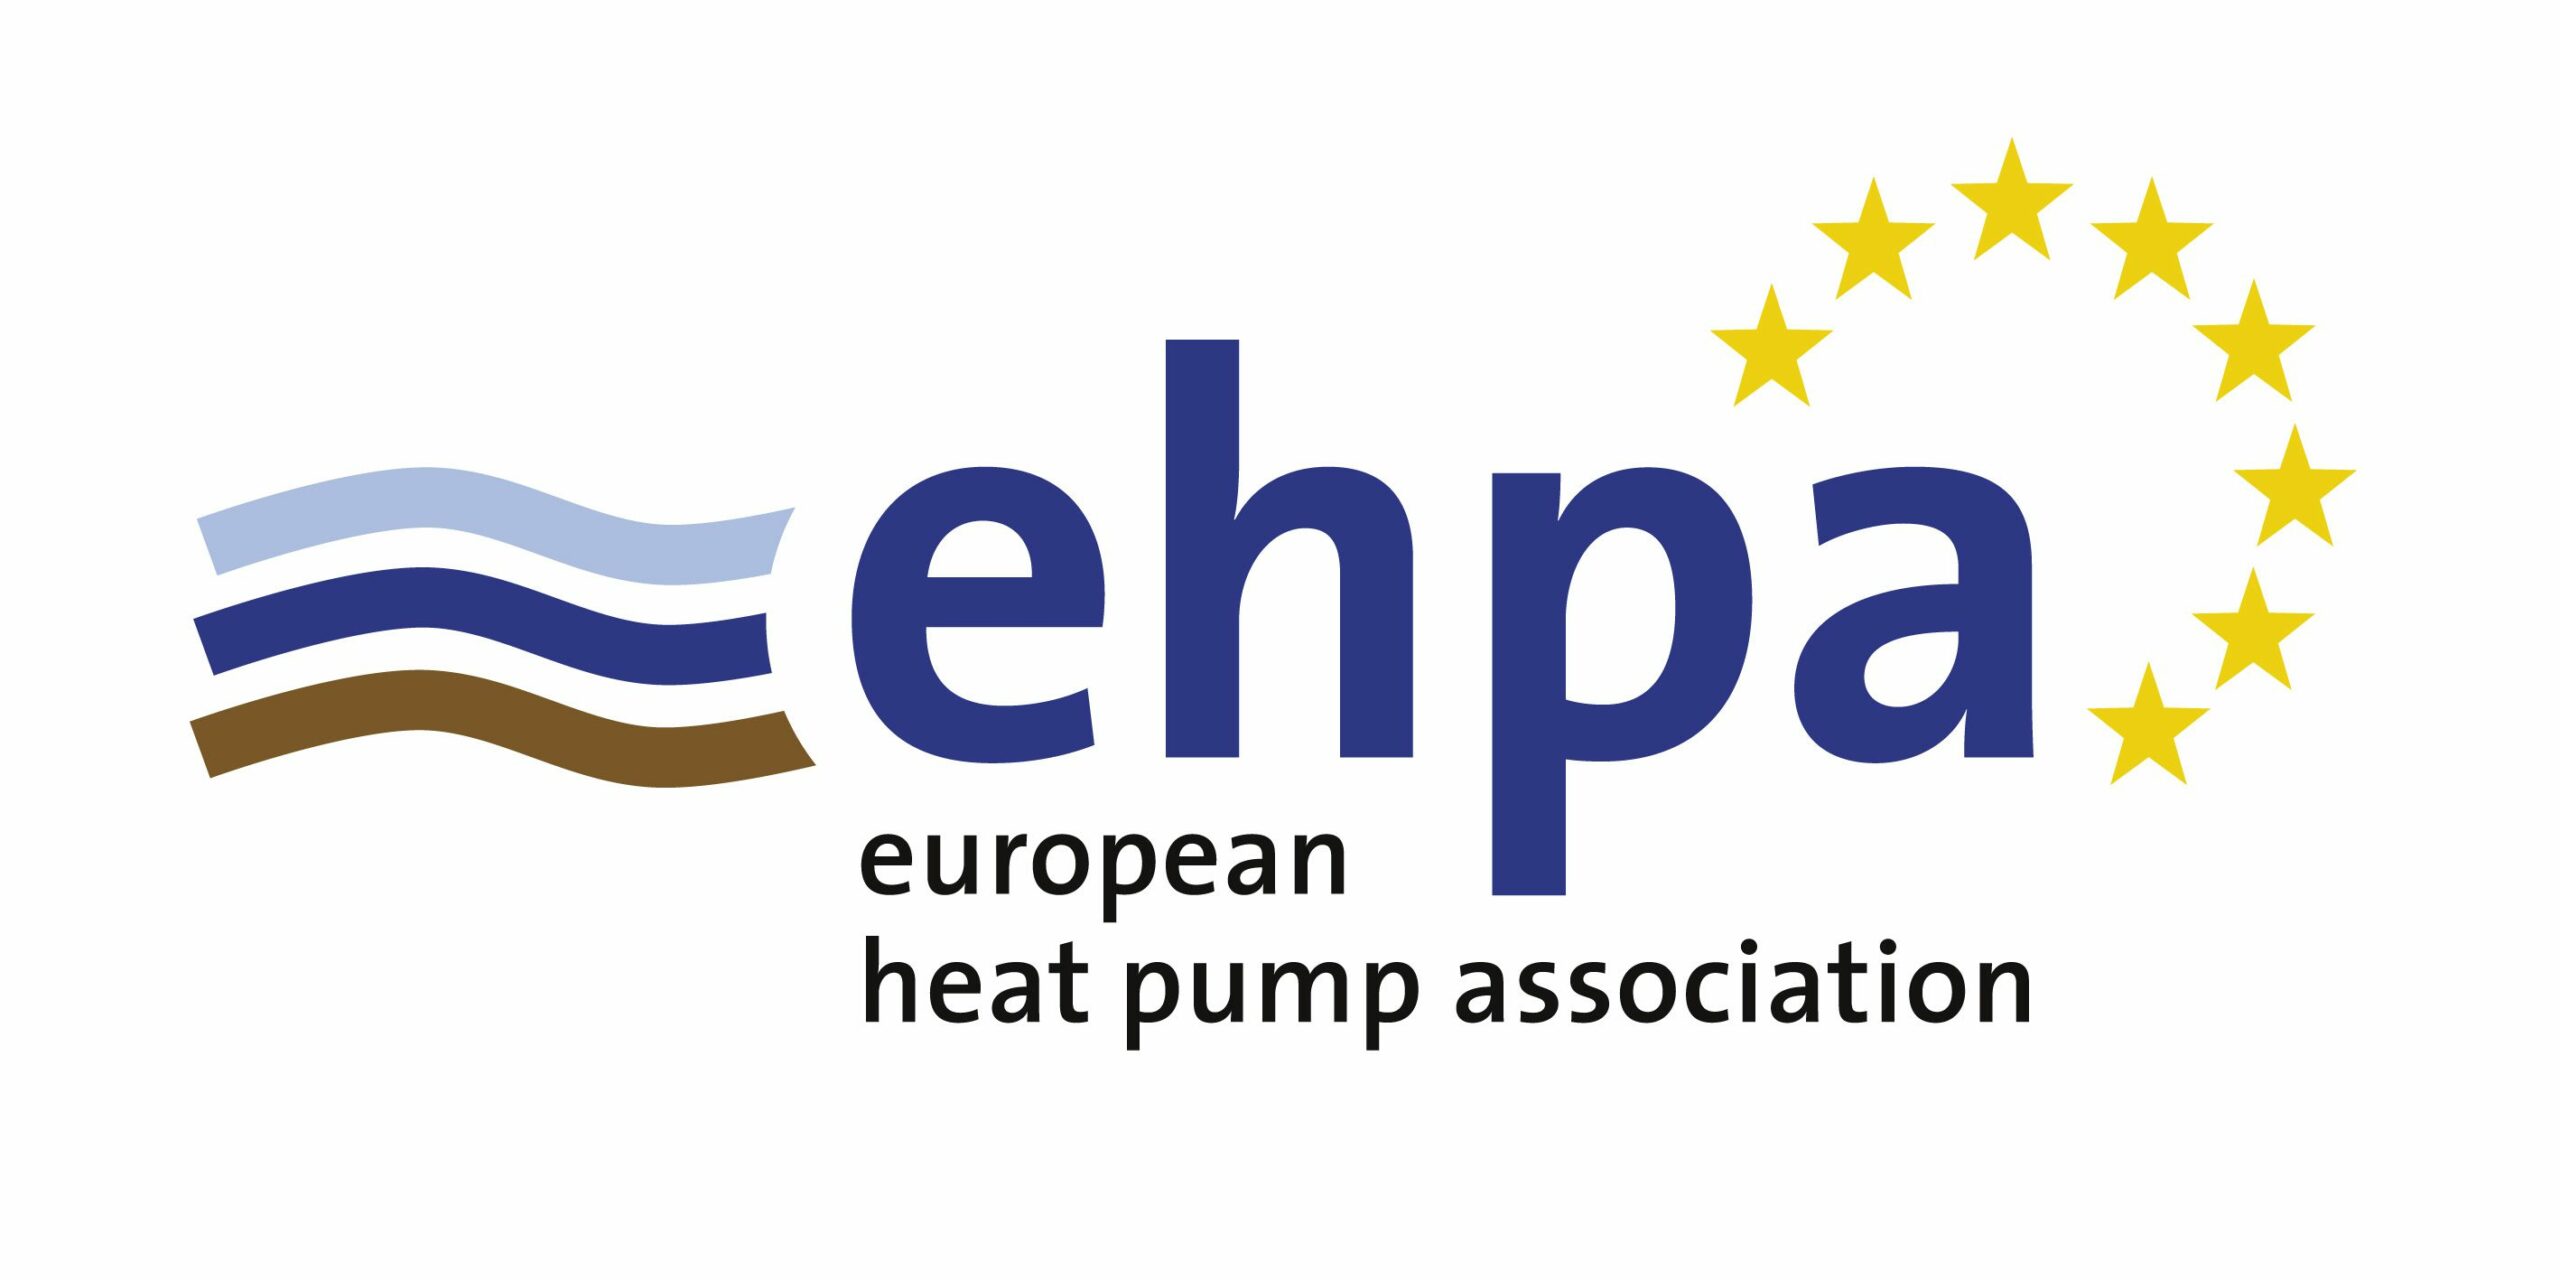 ehpa - european heat pump association - logo